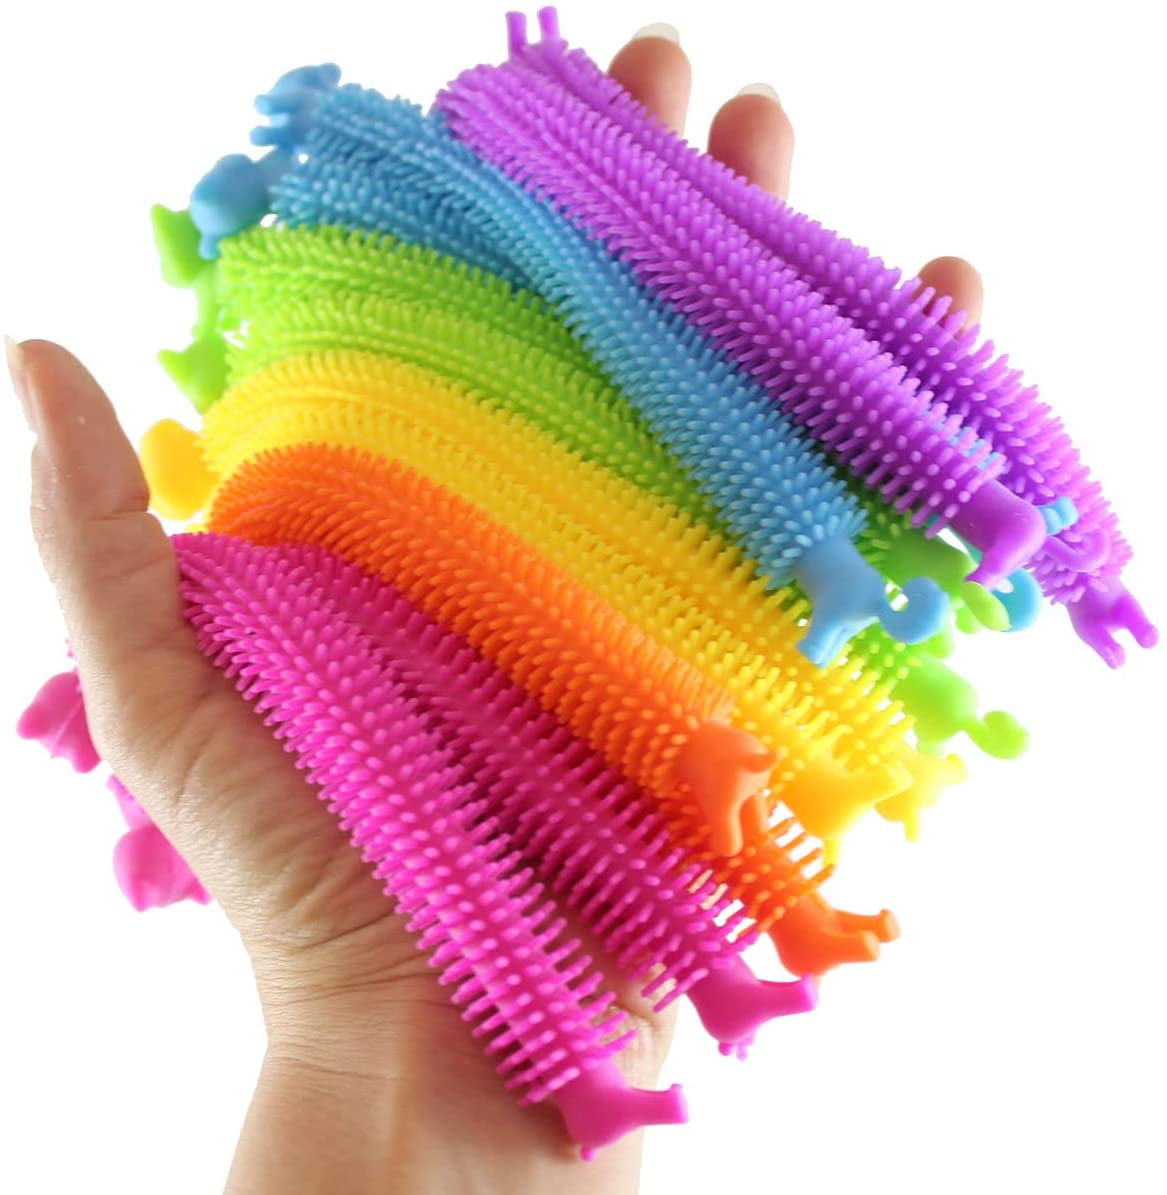 Fiddle Fidget Stress Sensory Toy Autism ADHD Hairy Stretchy Caterpillar Toy 